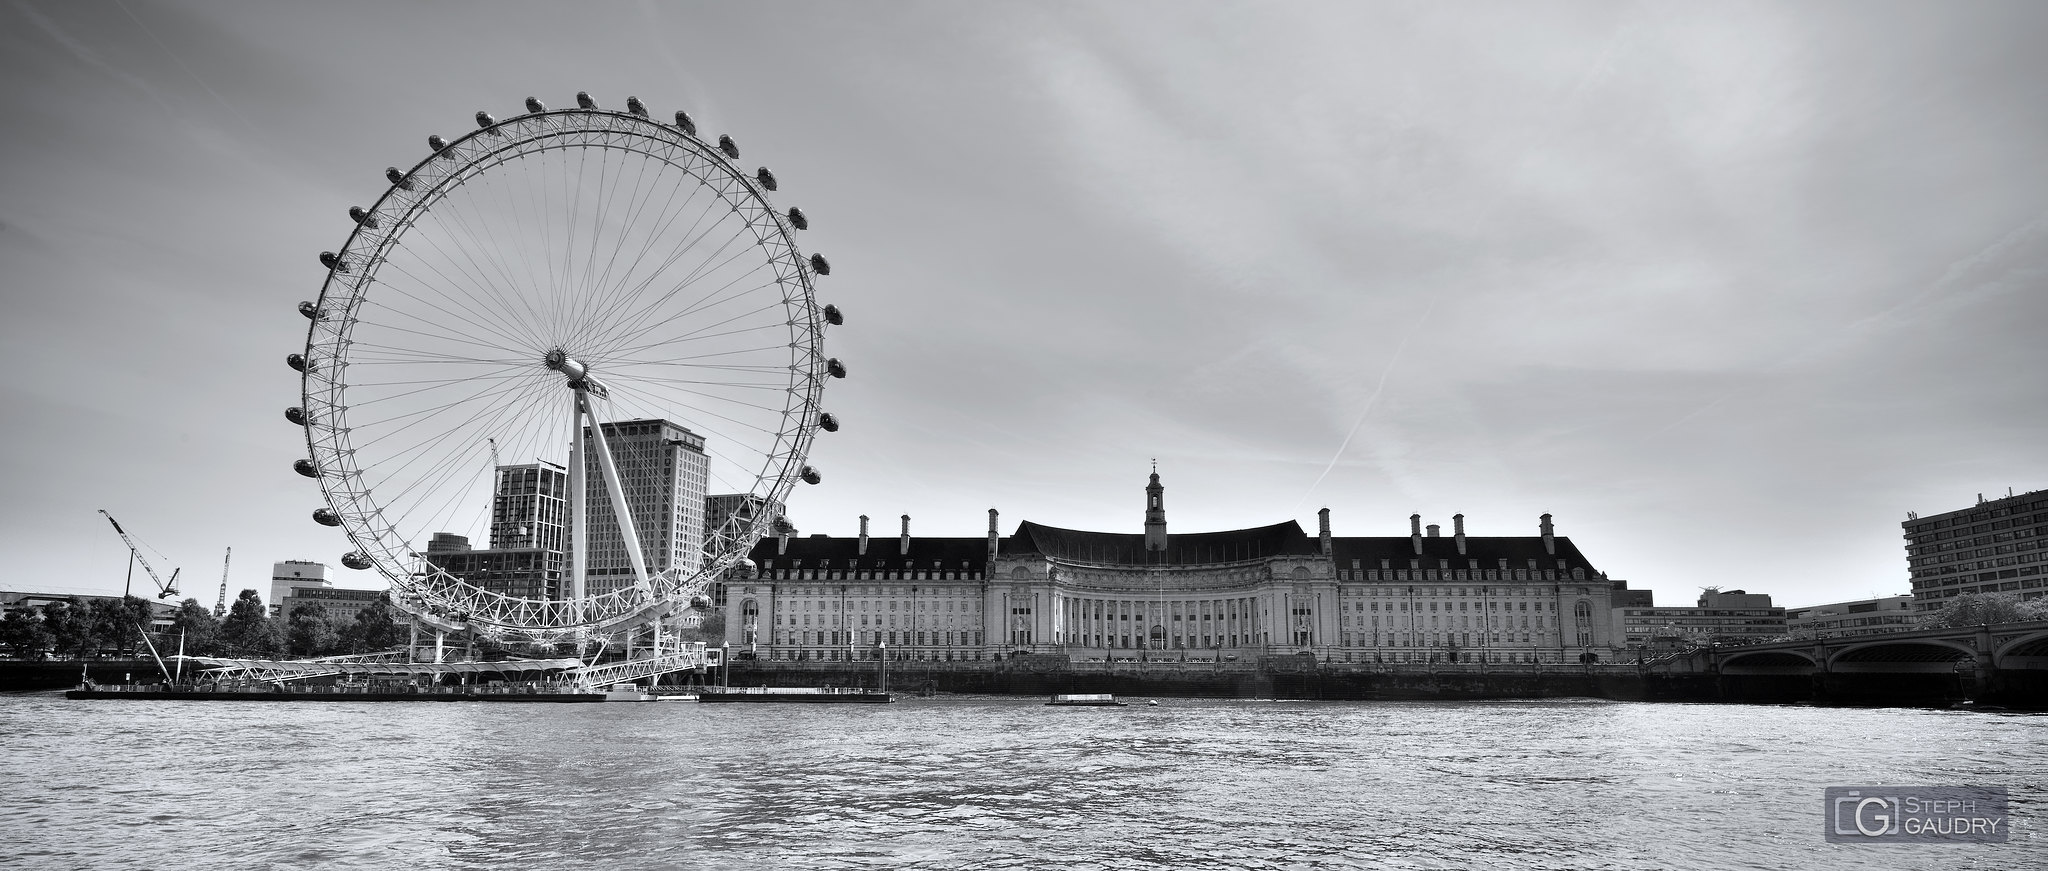 London Eye - London dungeon - Sea Life [Click to start slideshow]